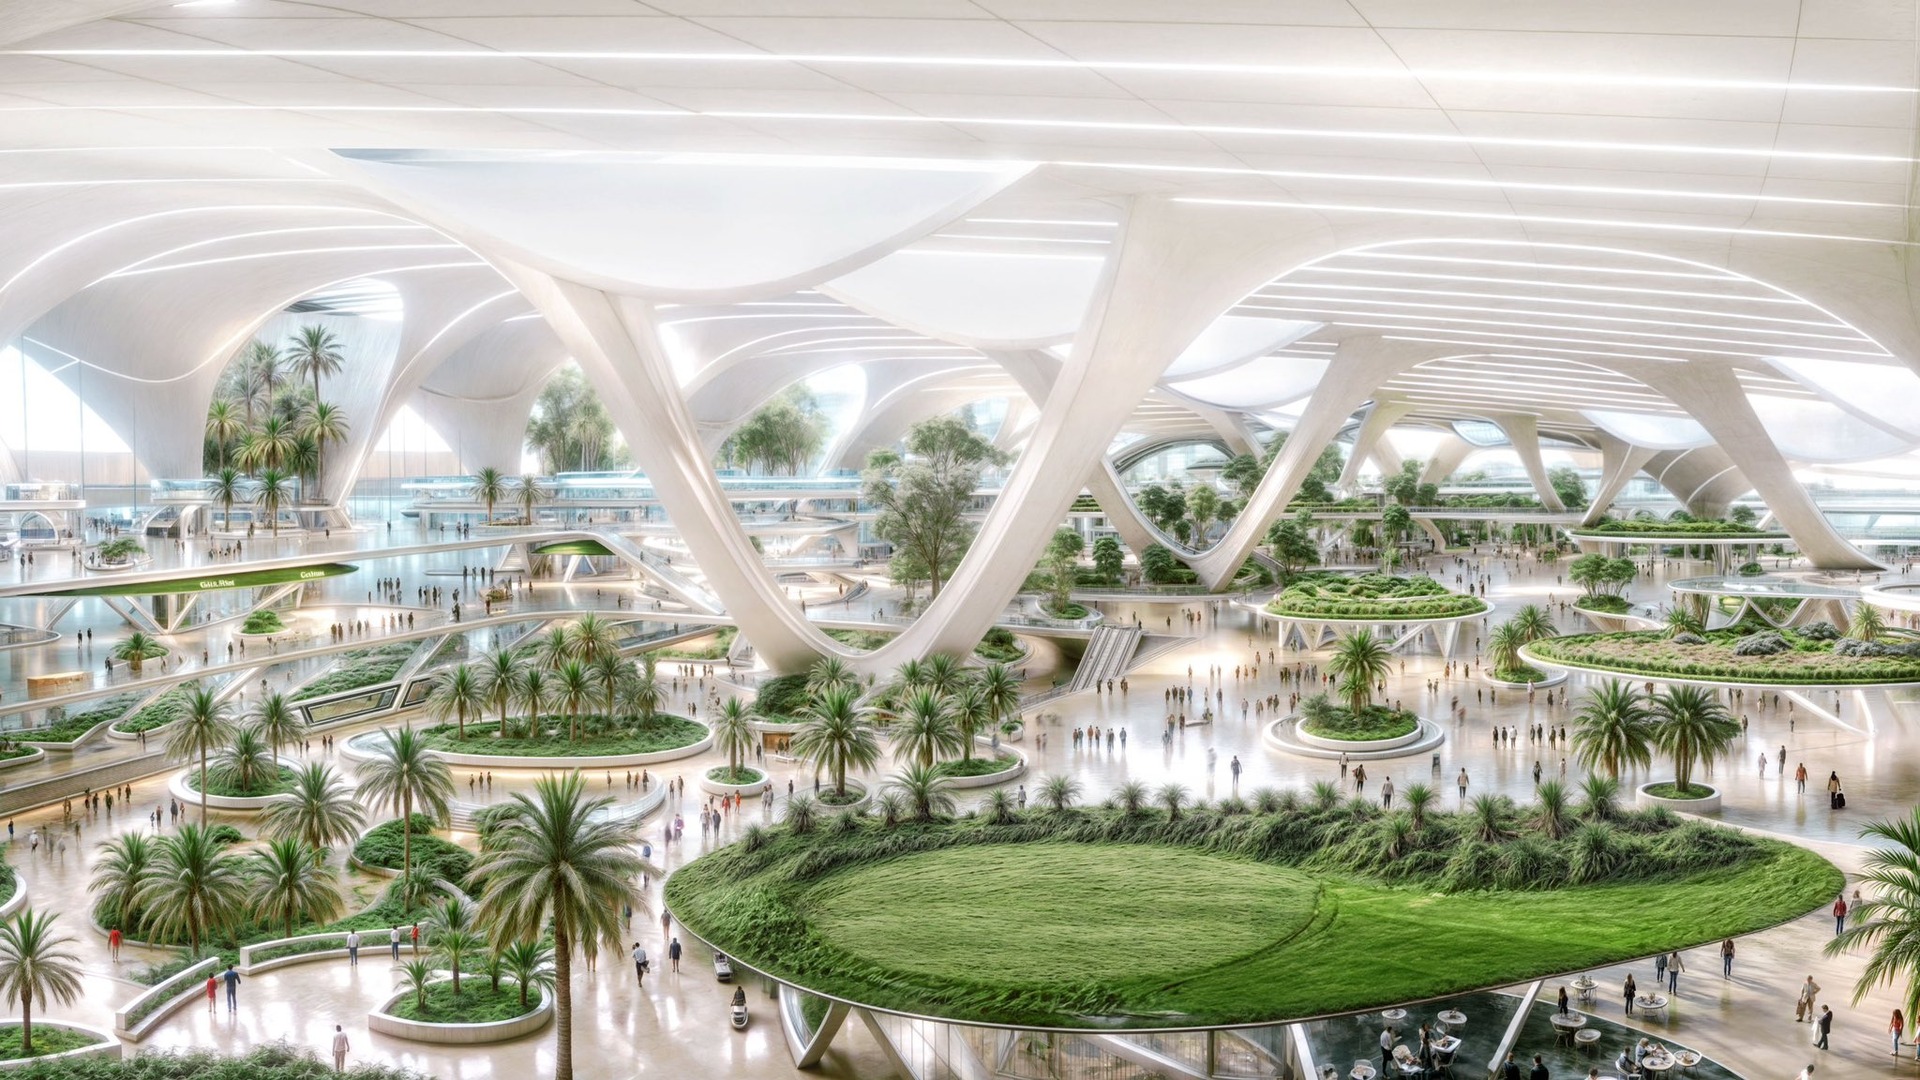 Dubai’s Al Maktoum International Airport set to become world’s largest [Video]